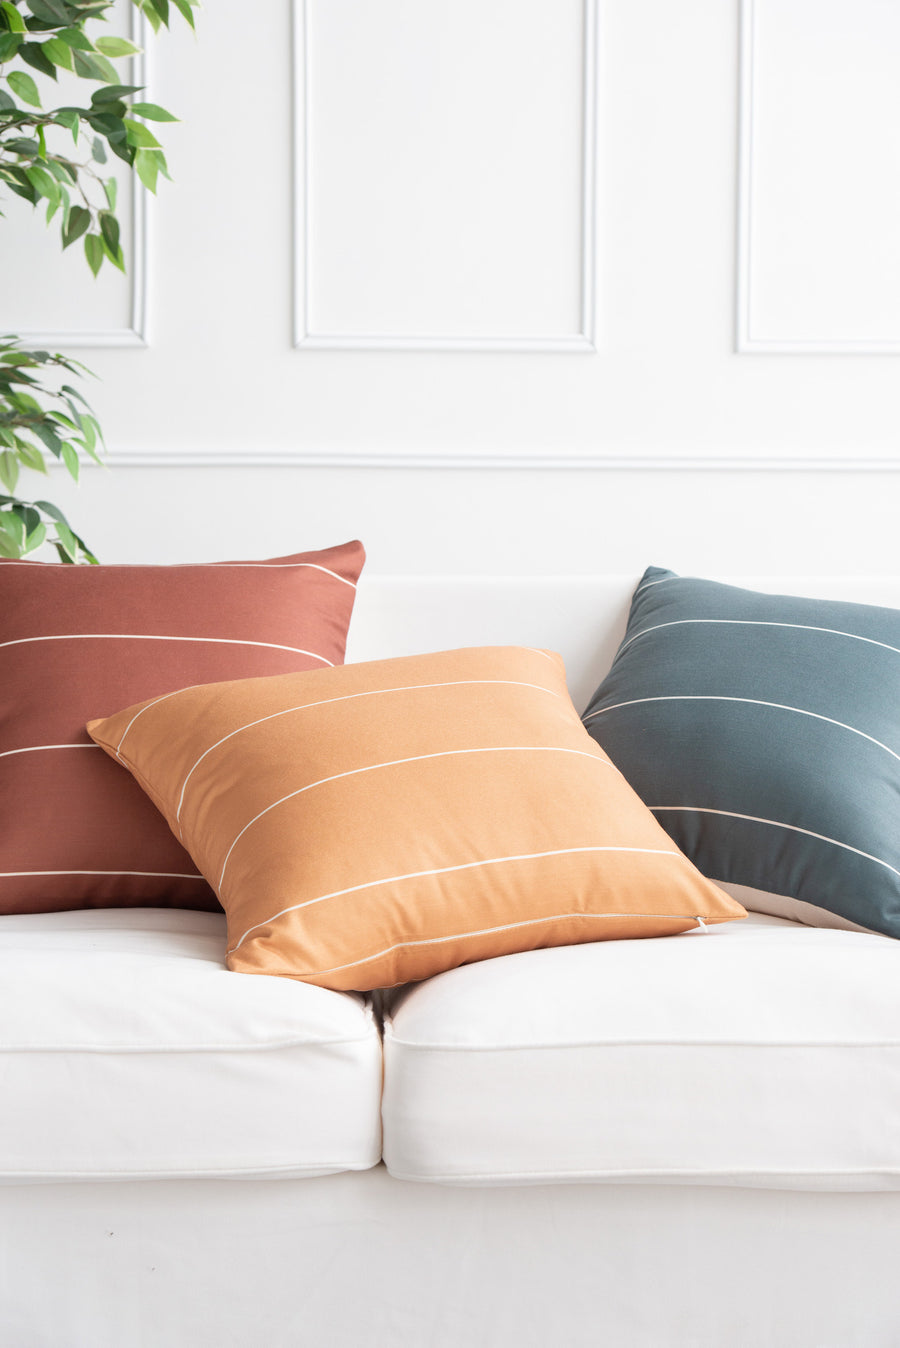 Modern Boho Pillow Cover, Stripes, Moss Green, 20